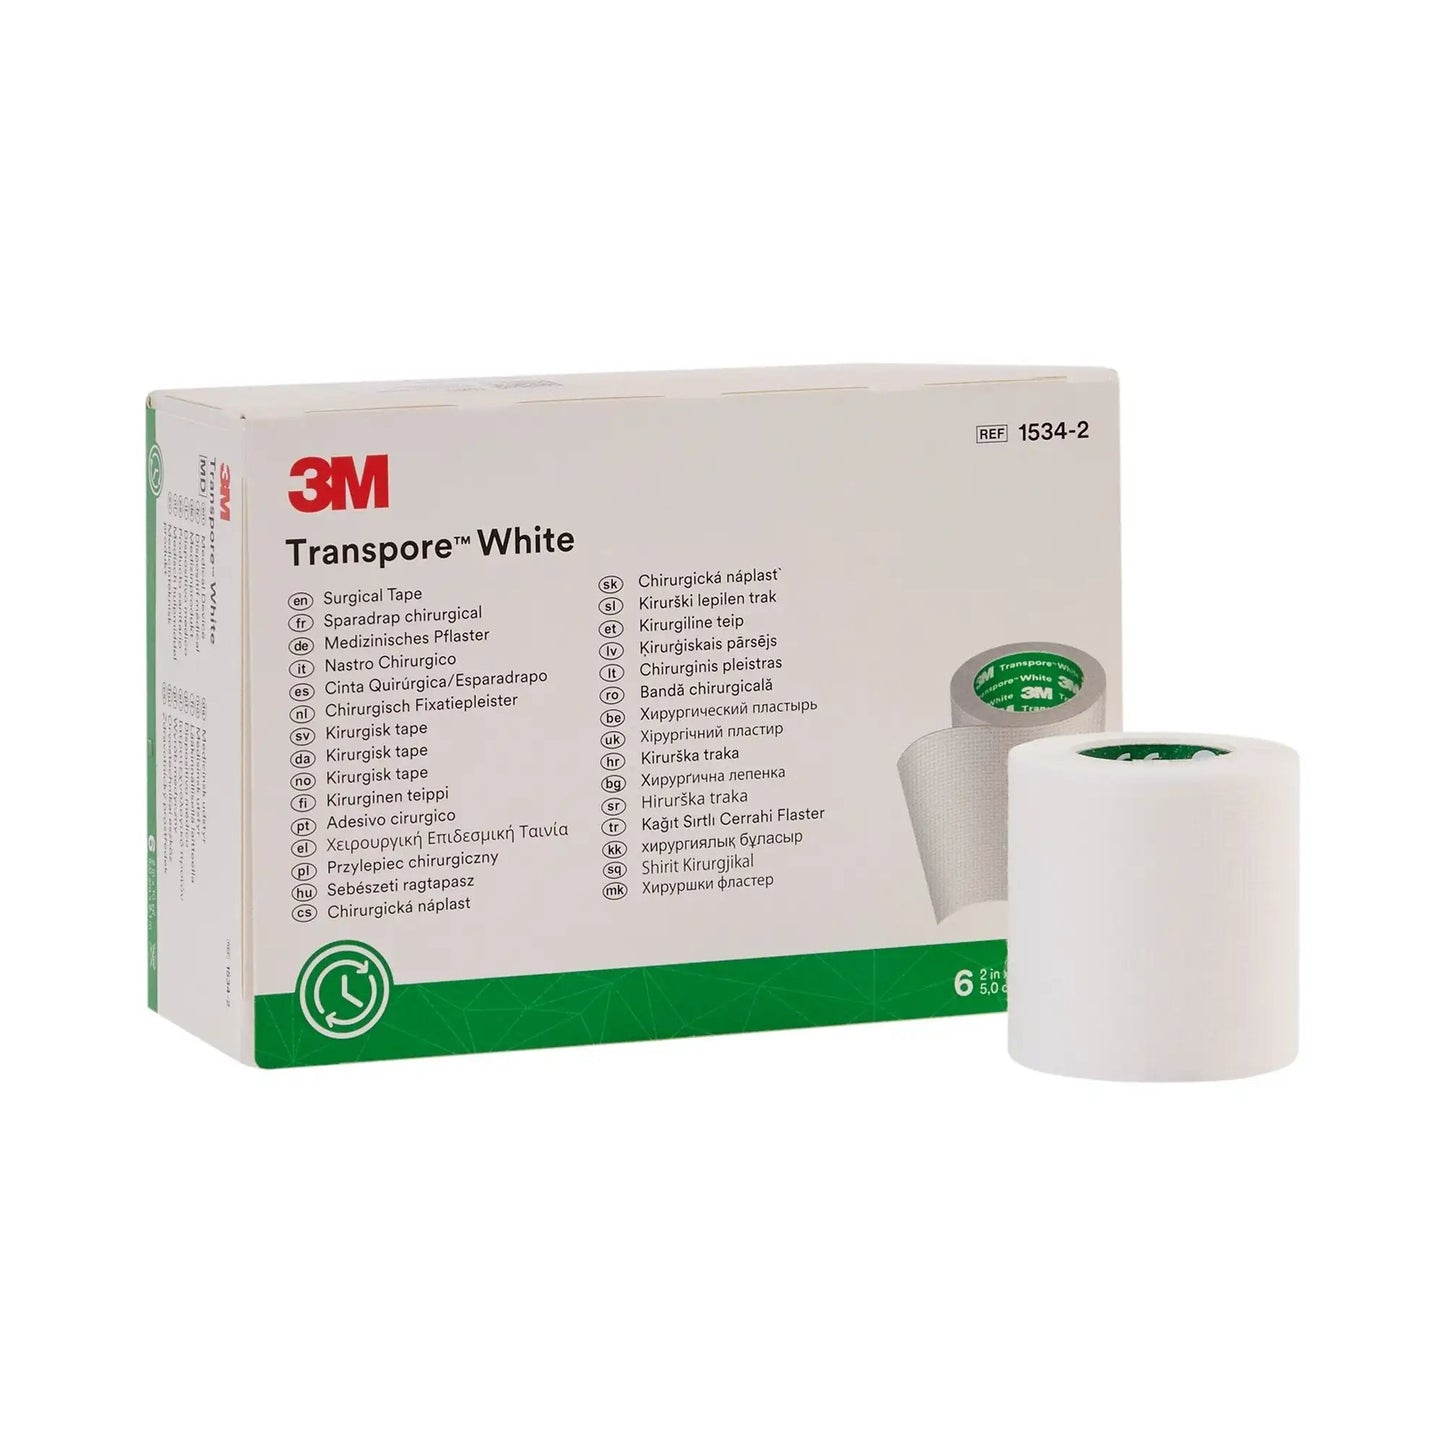 3M Transpore White Medical Tape, 2 inch x 10 yard